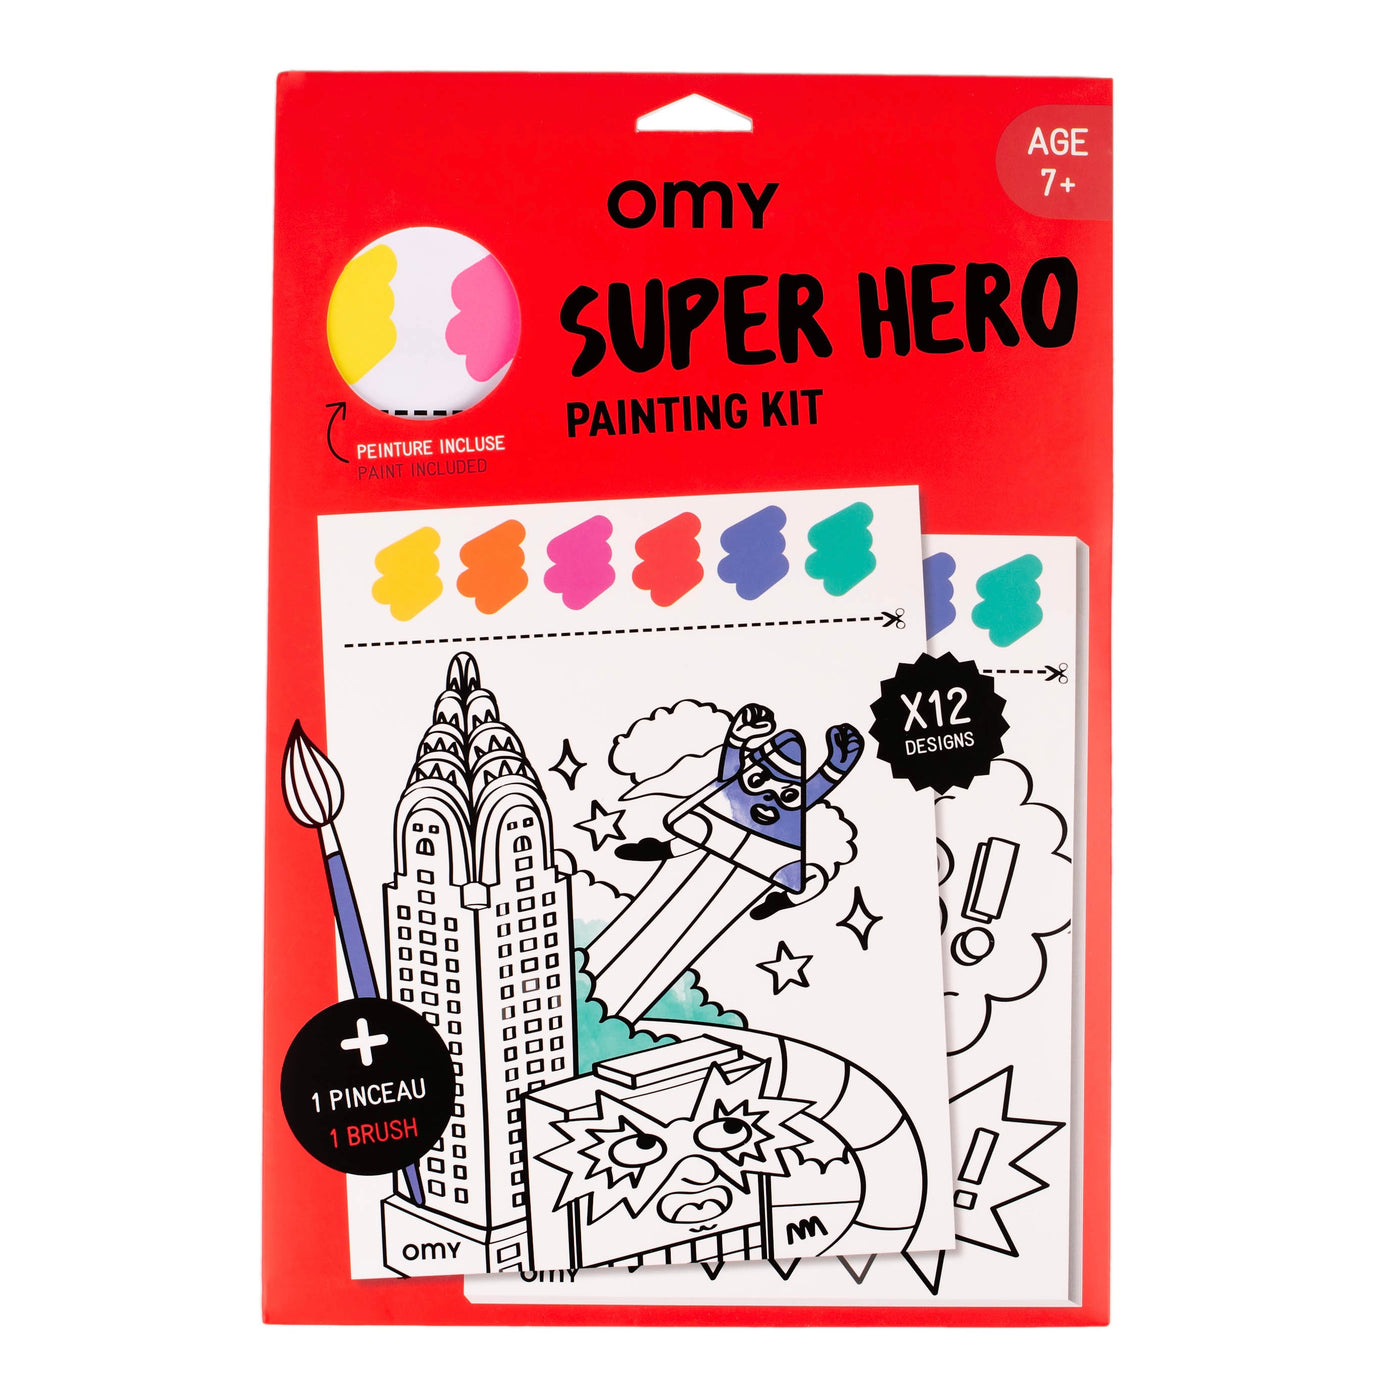 Painting kit Super hero